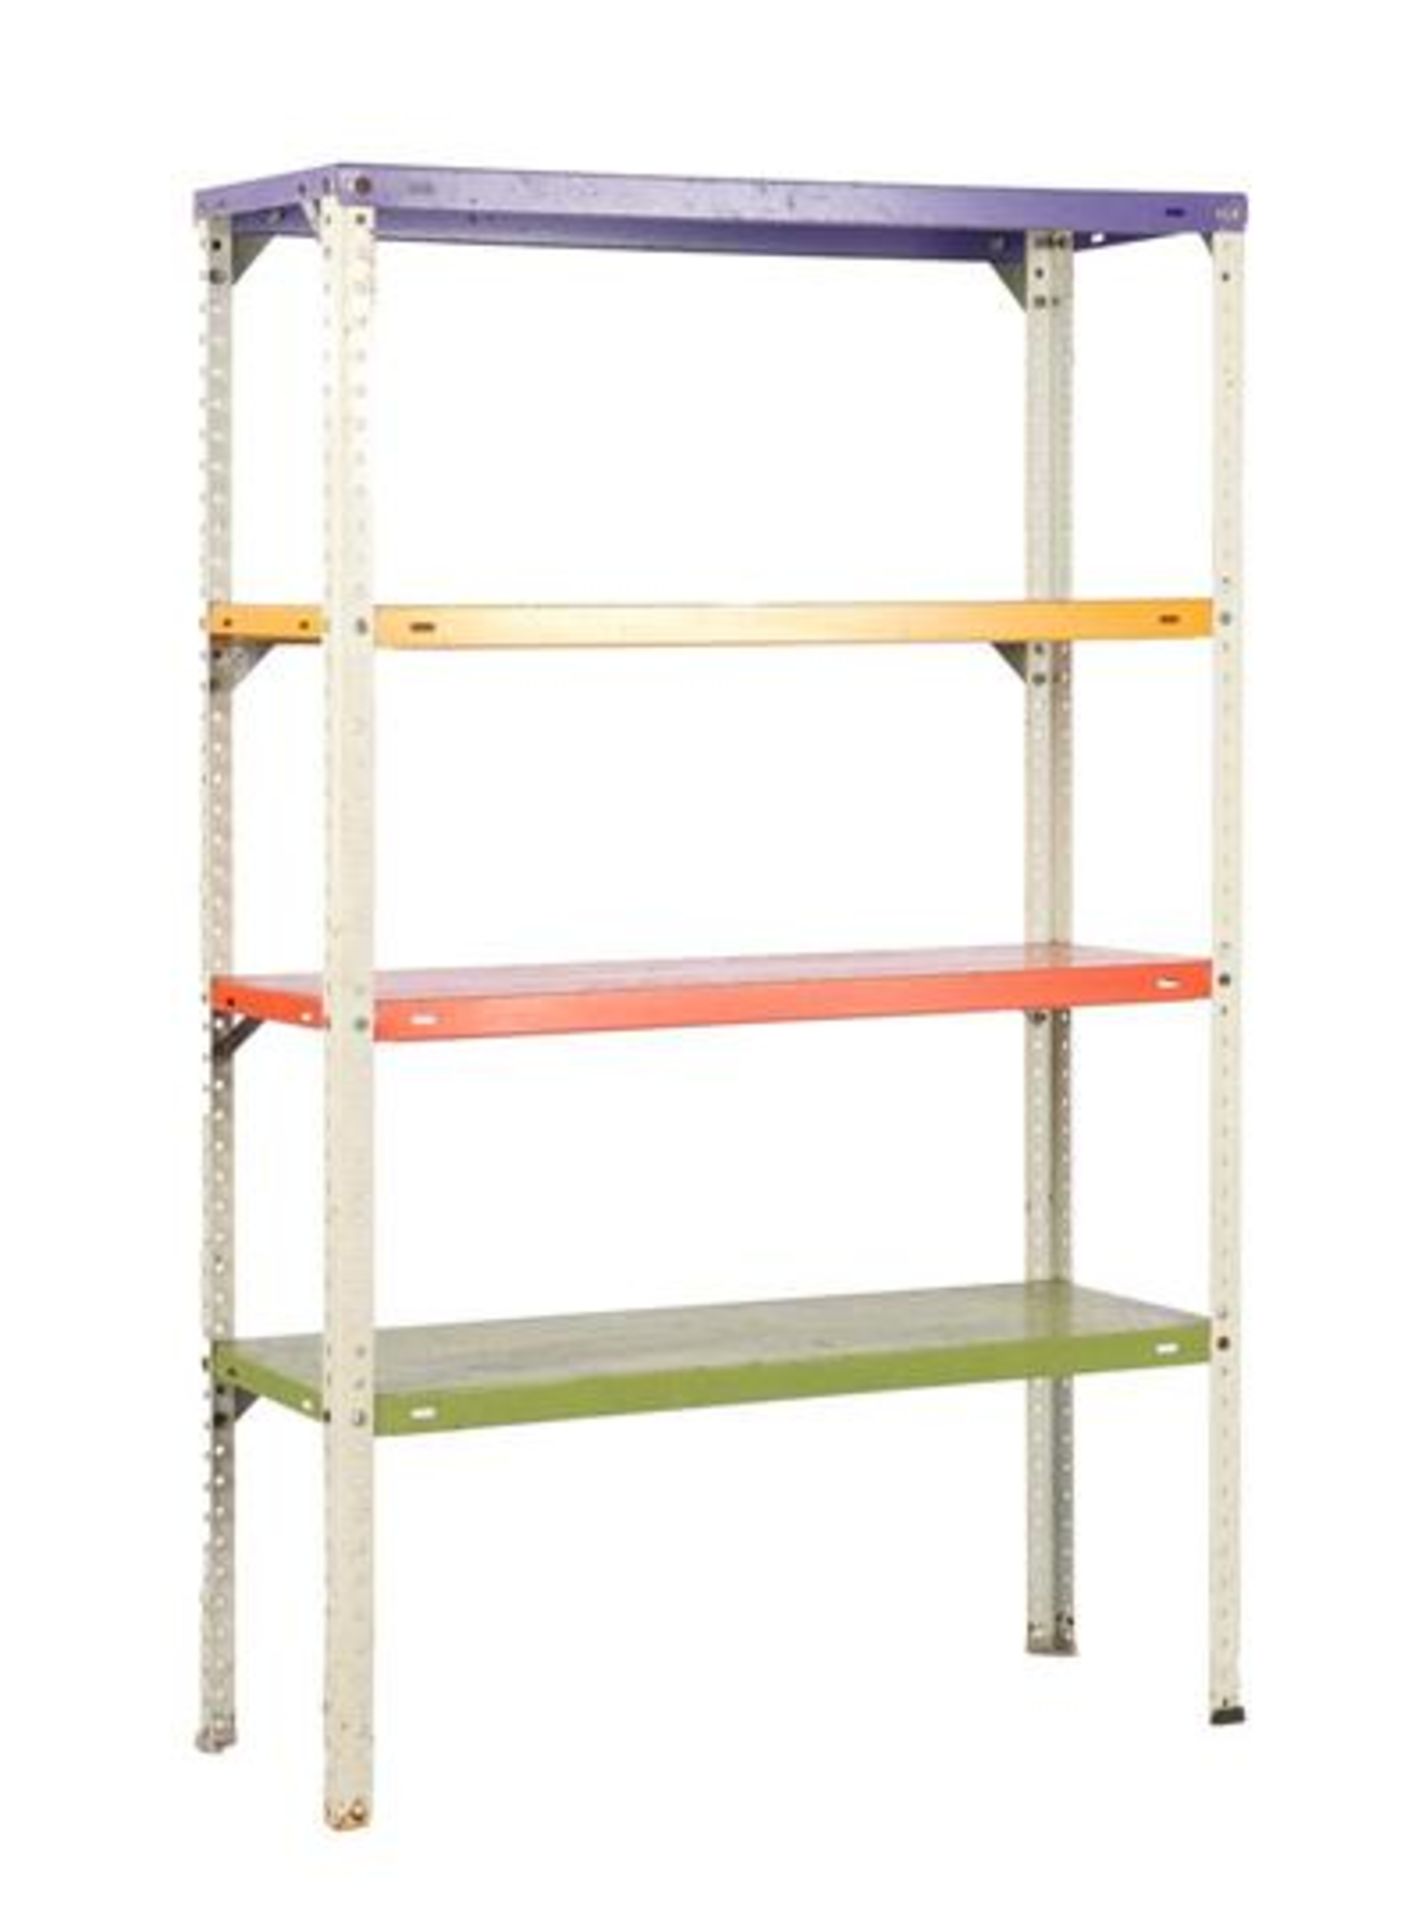 Metal 4-shelf rack with colored shelves 126 cm high, 80 cm wide, 30 cm deep, 1970s